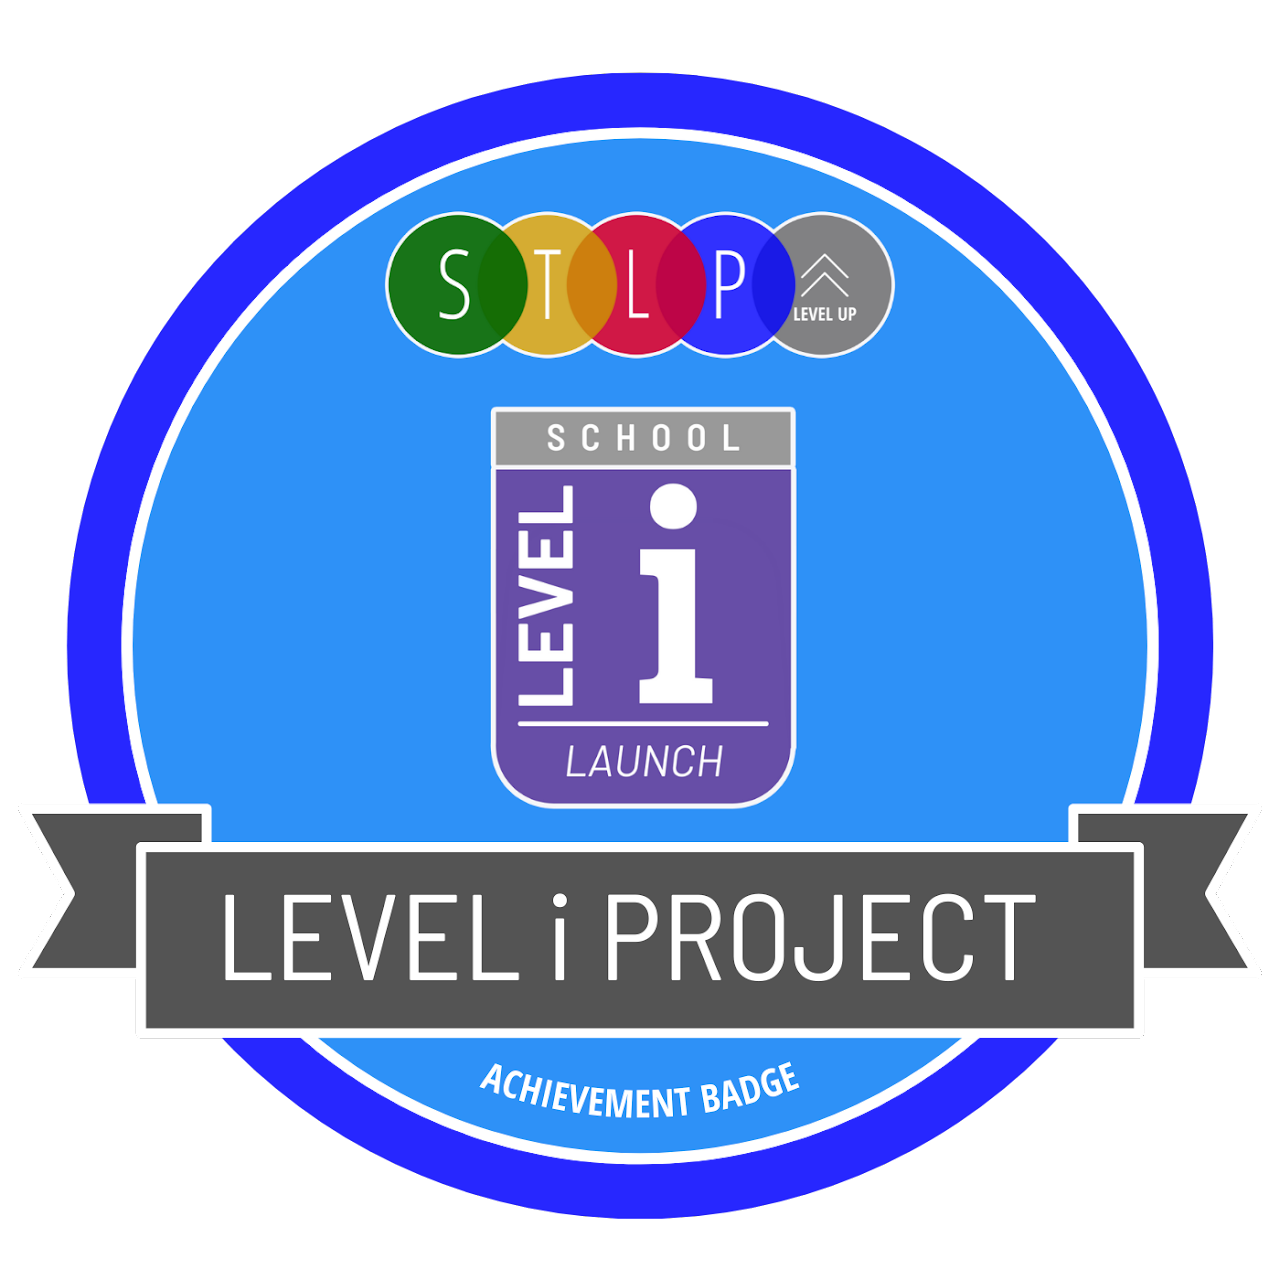 Level i Project Badge